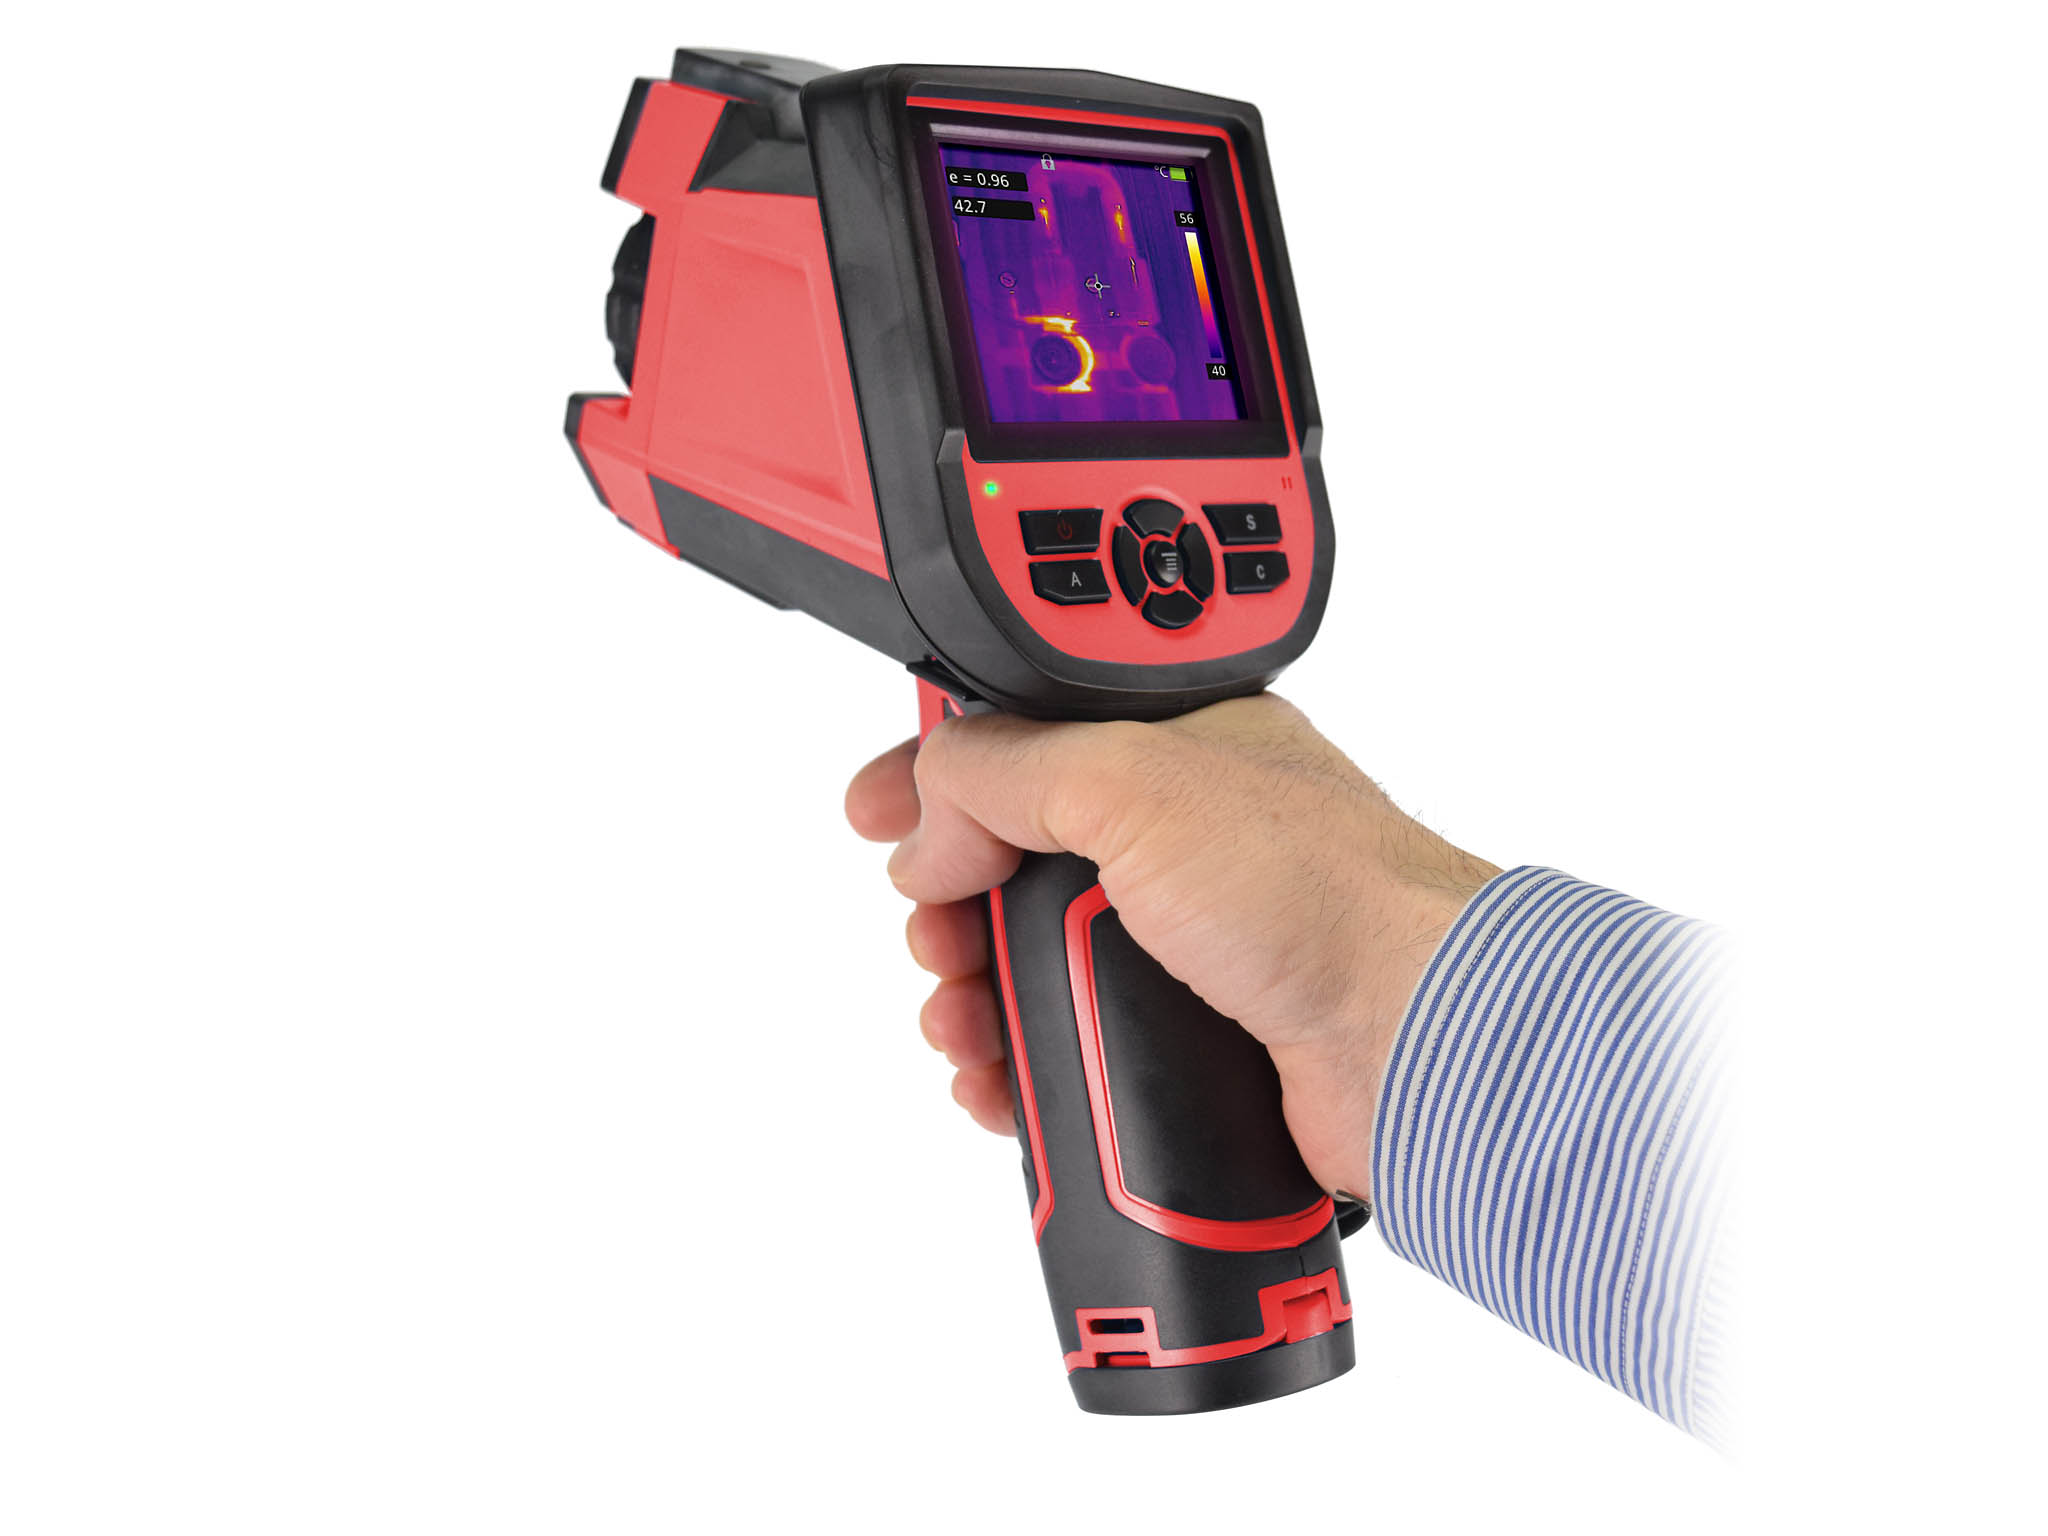 IR-283: Professional thermal imaging camera with visual camera